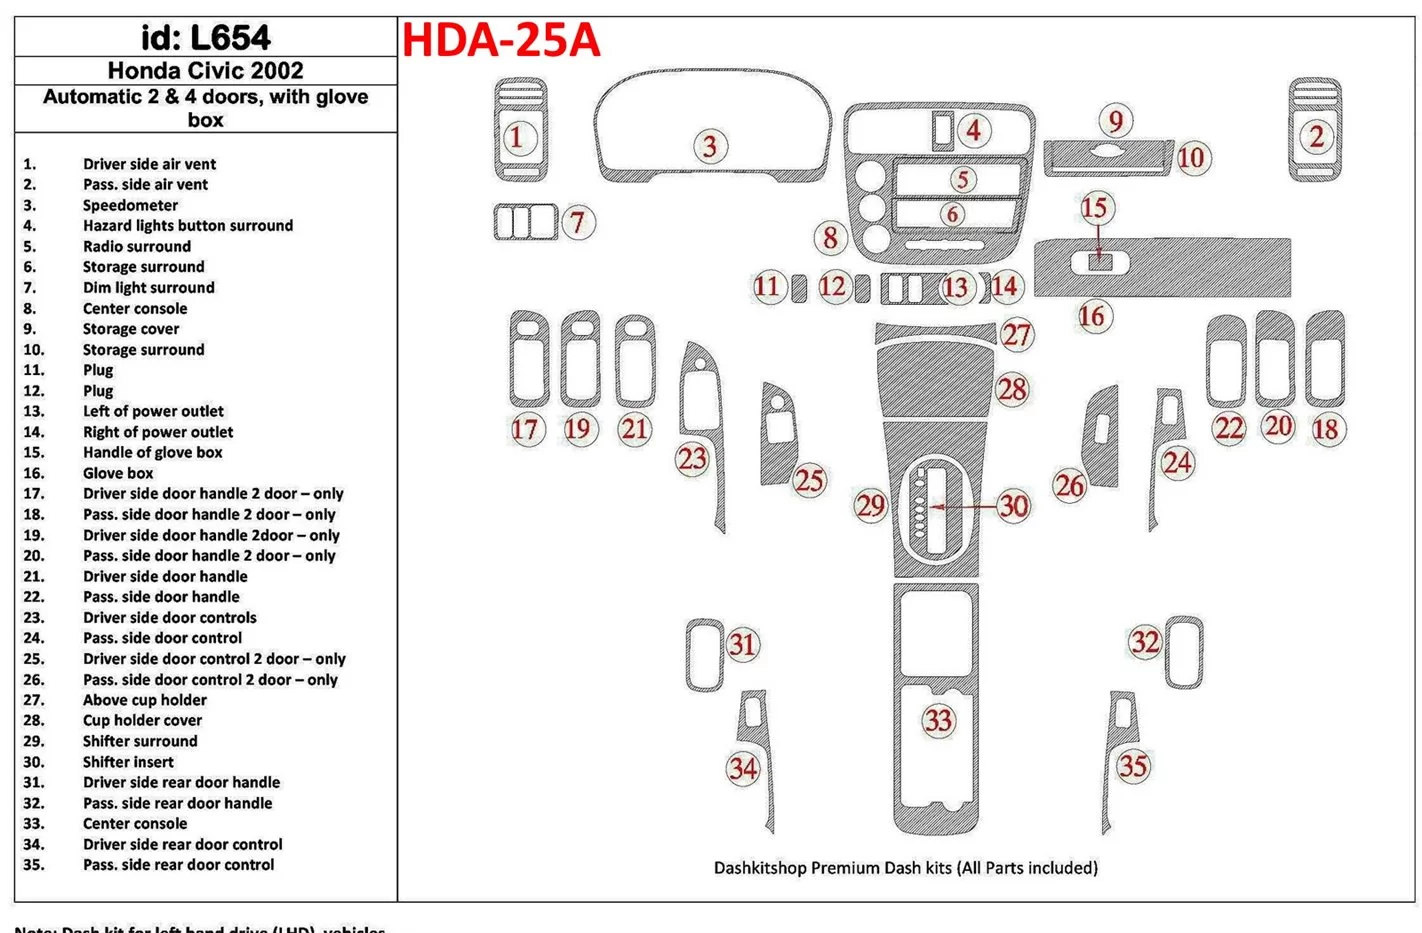 Honda Civic 2002-2002 Automatic Gearbox, 2 or 4 Doors, with glowe-box, 35 Parts set Decor de carlinga su interior